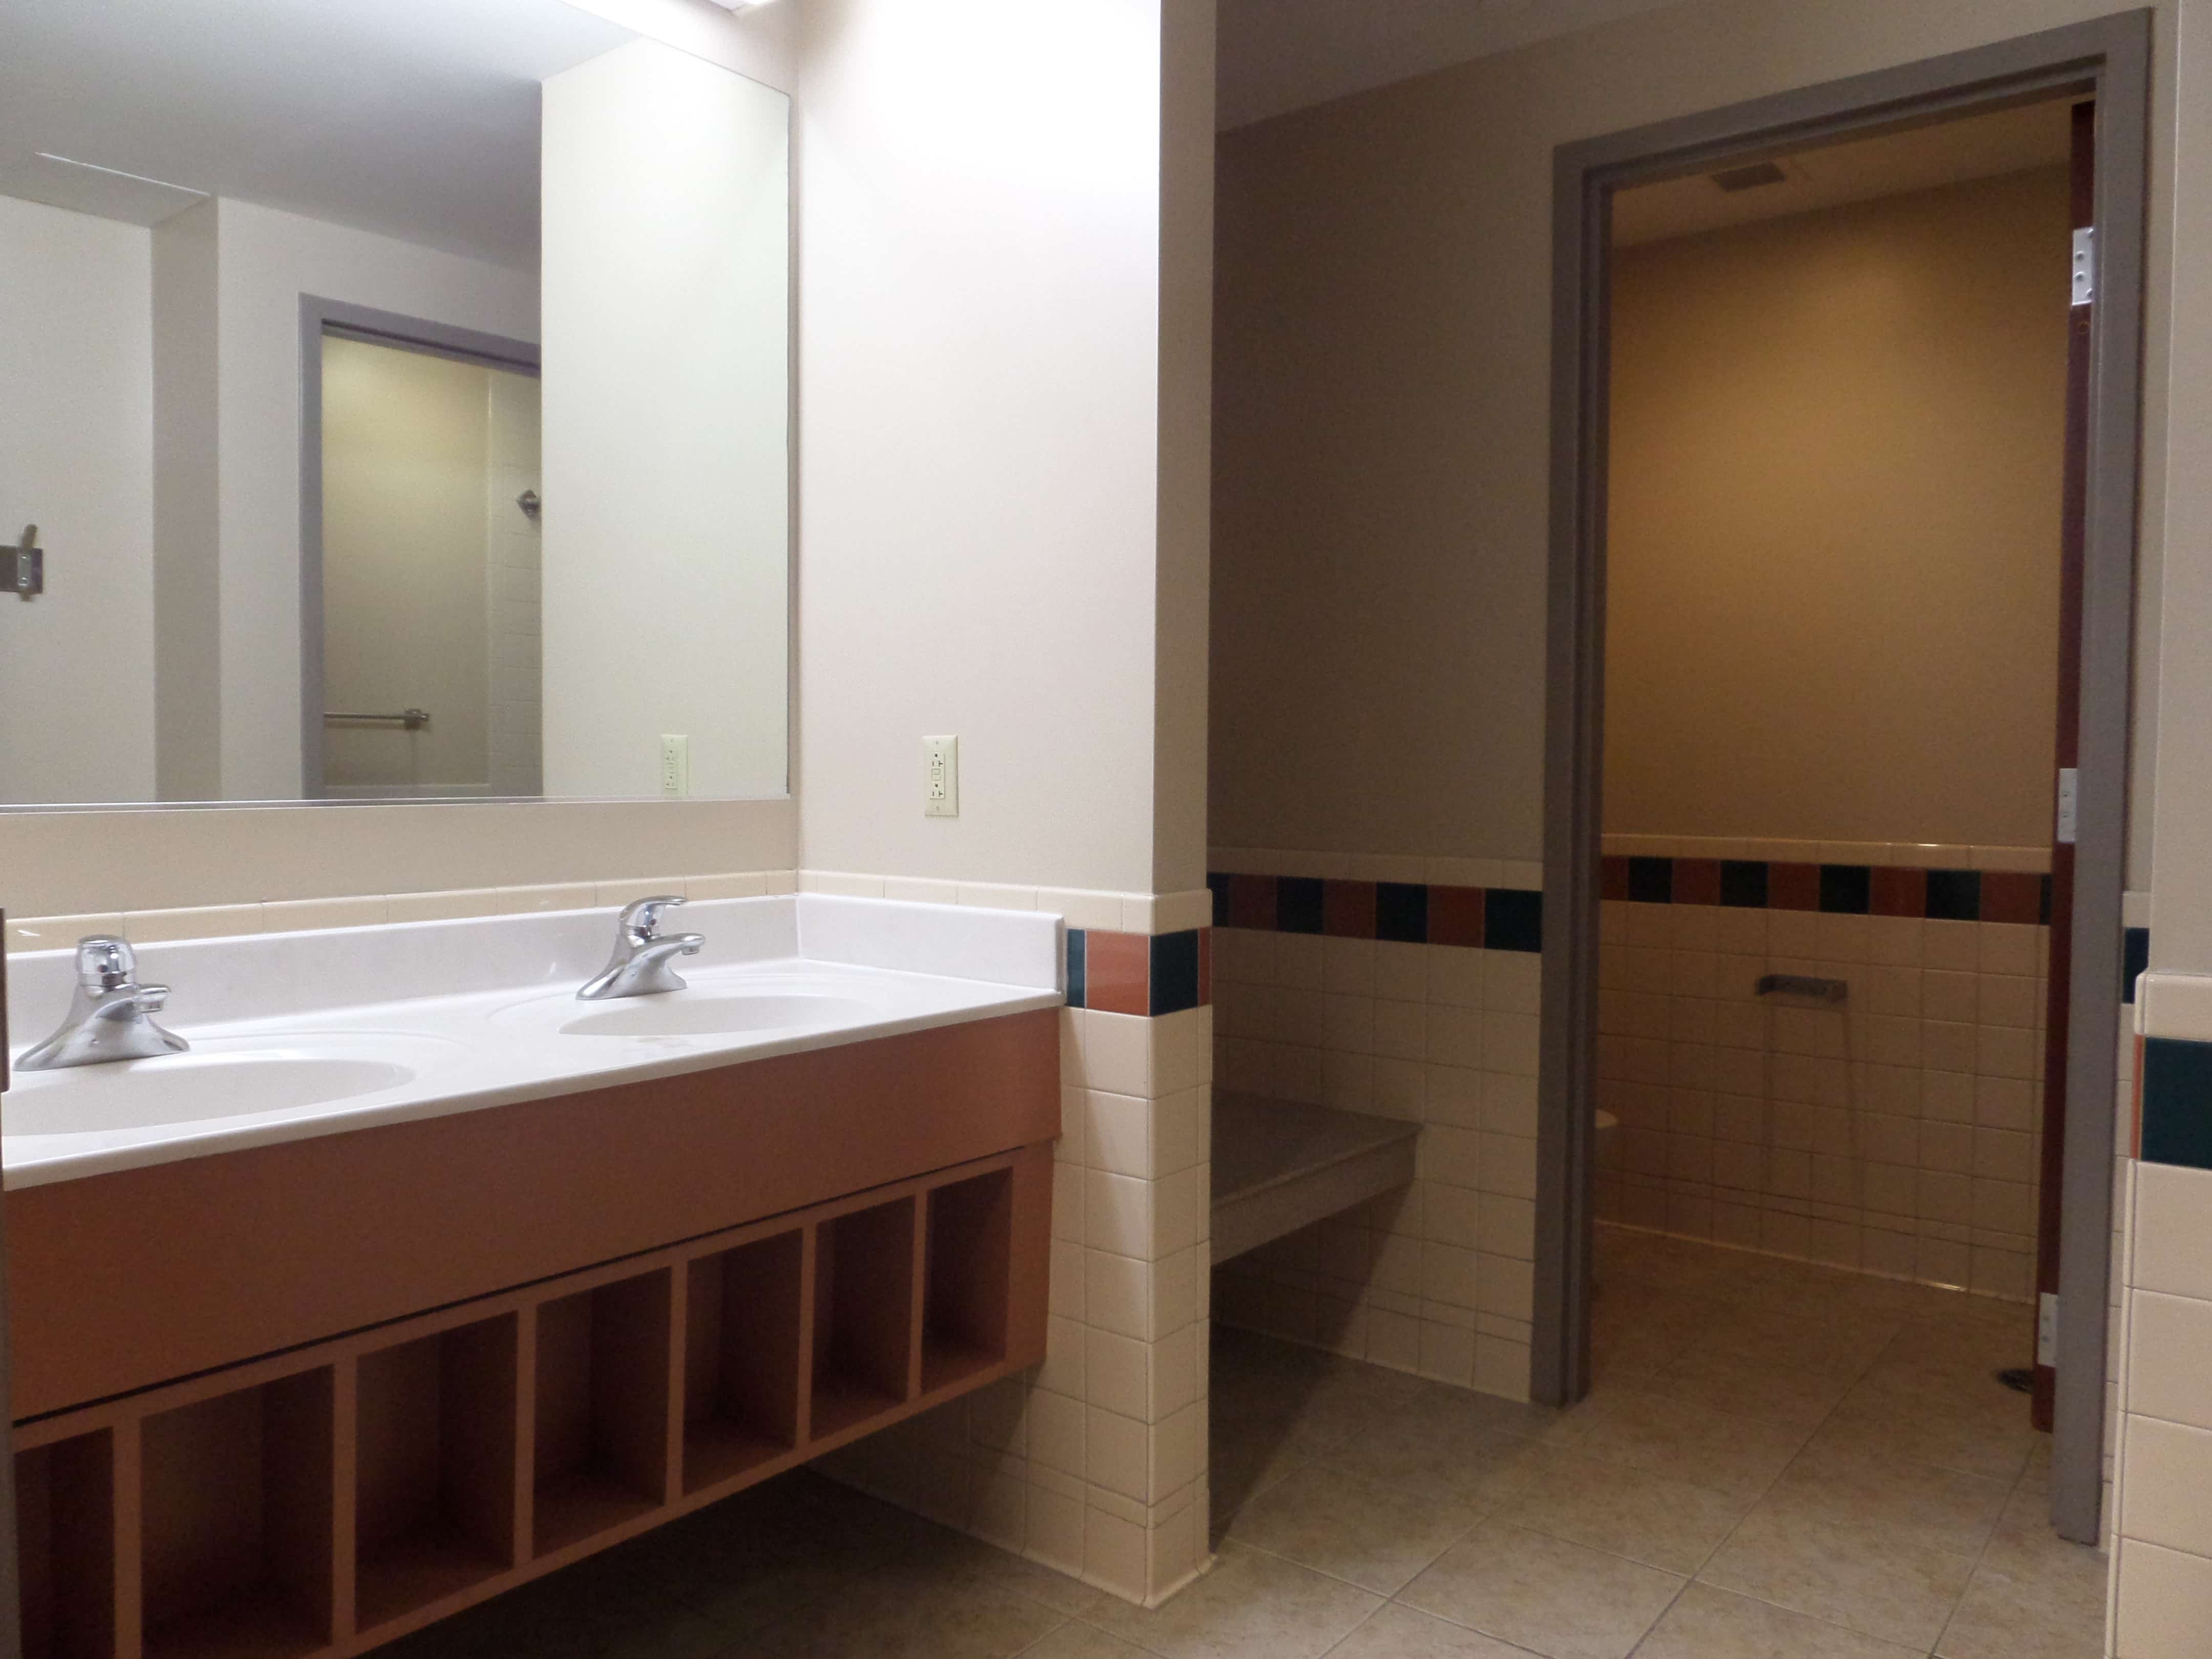 Shared bathroom per suite